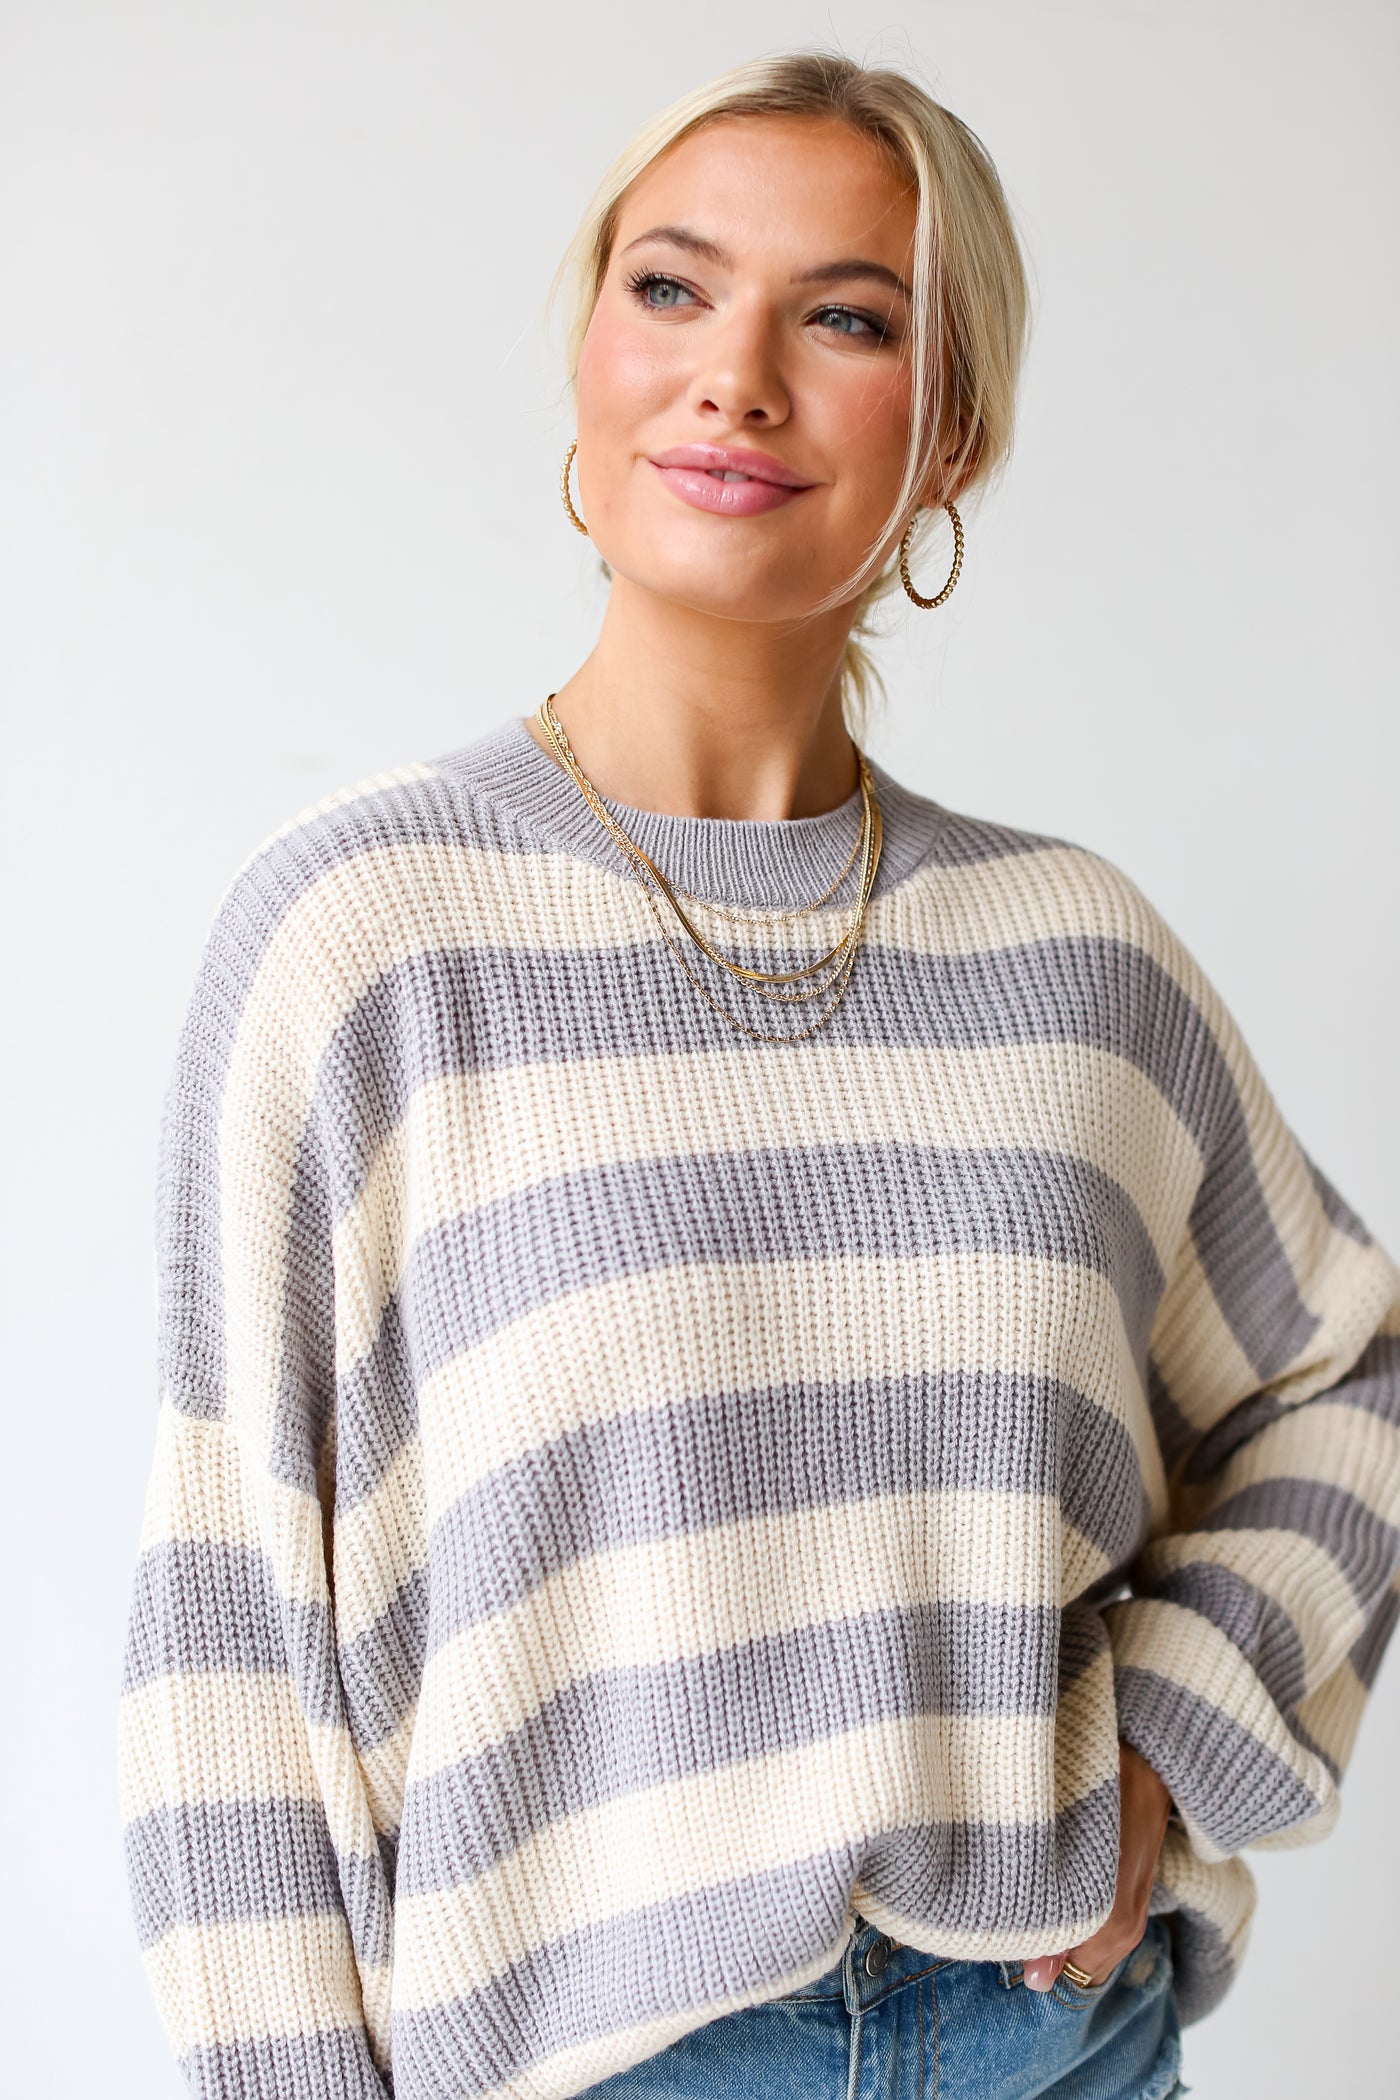 grey Striped Sweater close up